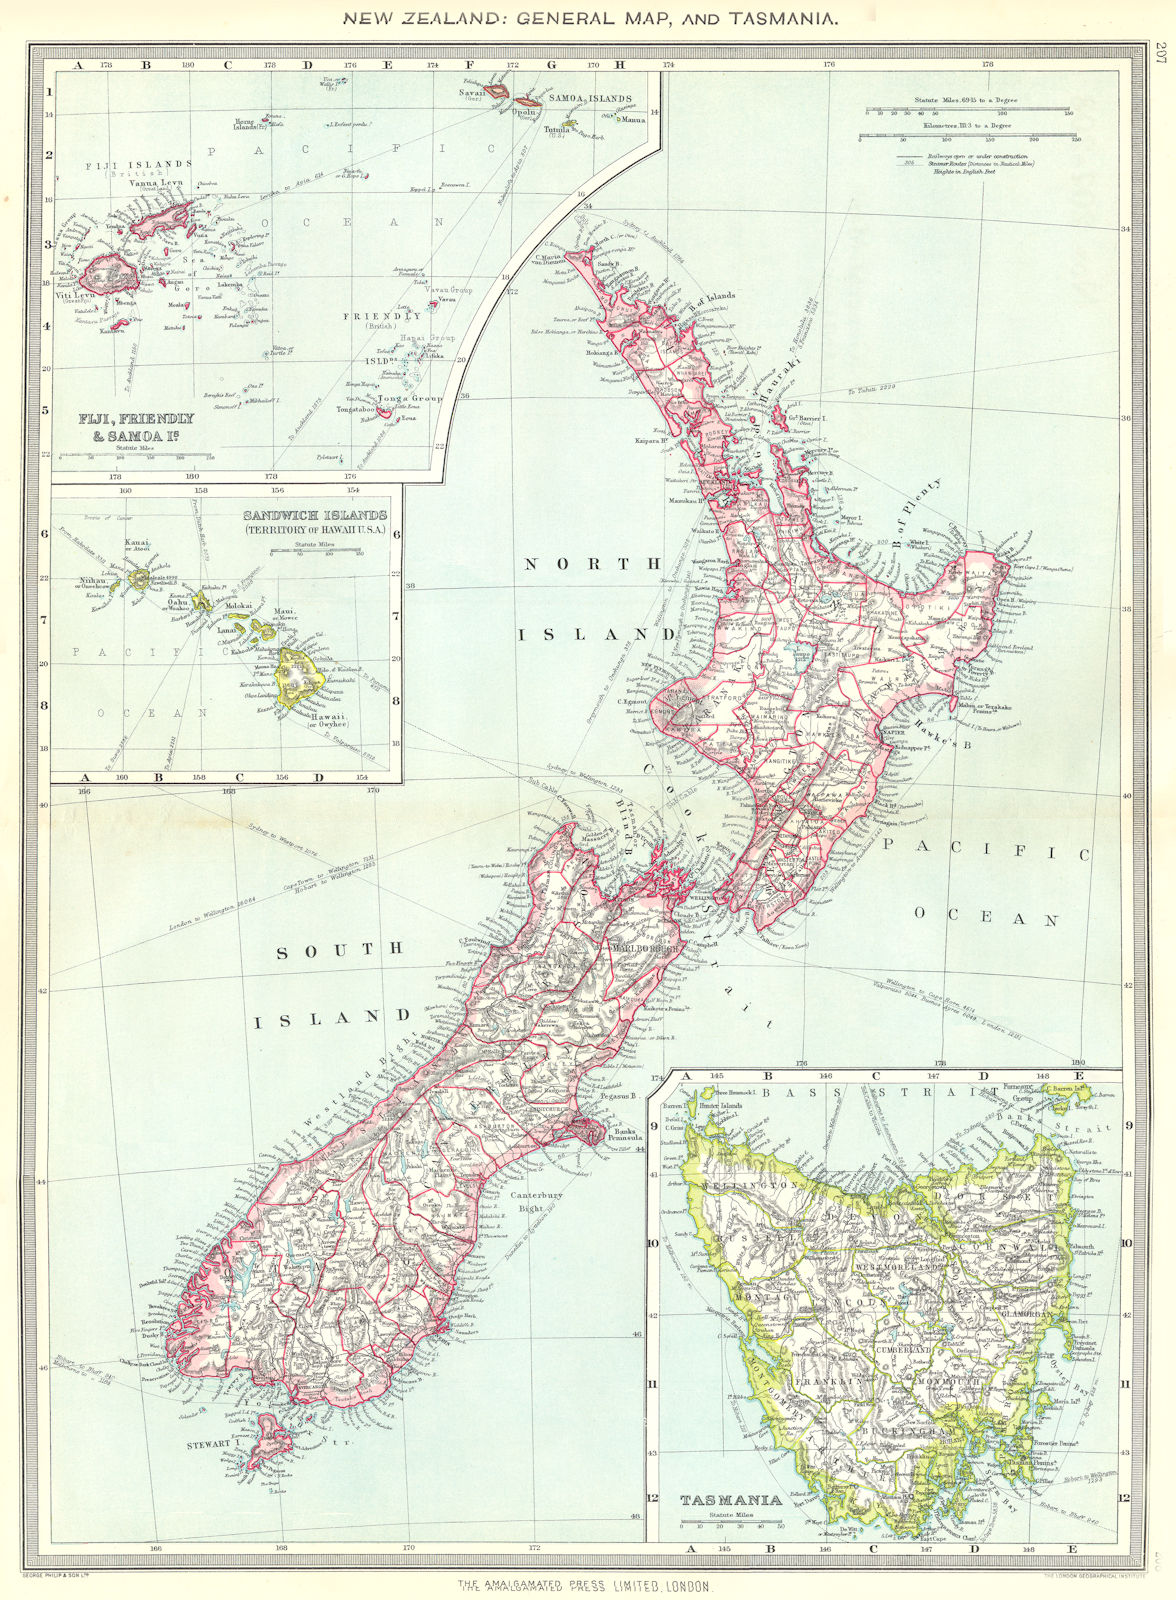 NEW ZEALAND. Tasmania Fiji Friendly Samoa Sandwich Hawaii Islands 1907 old map